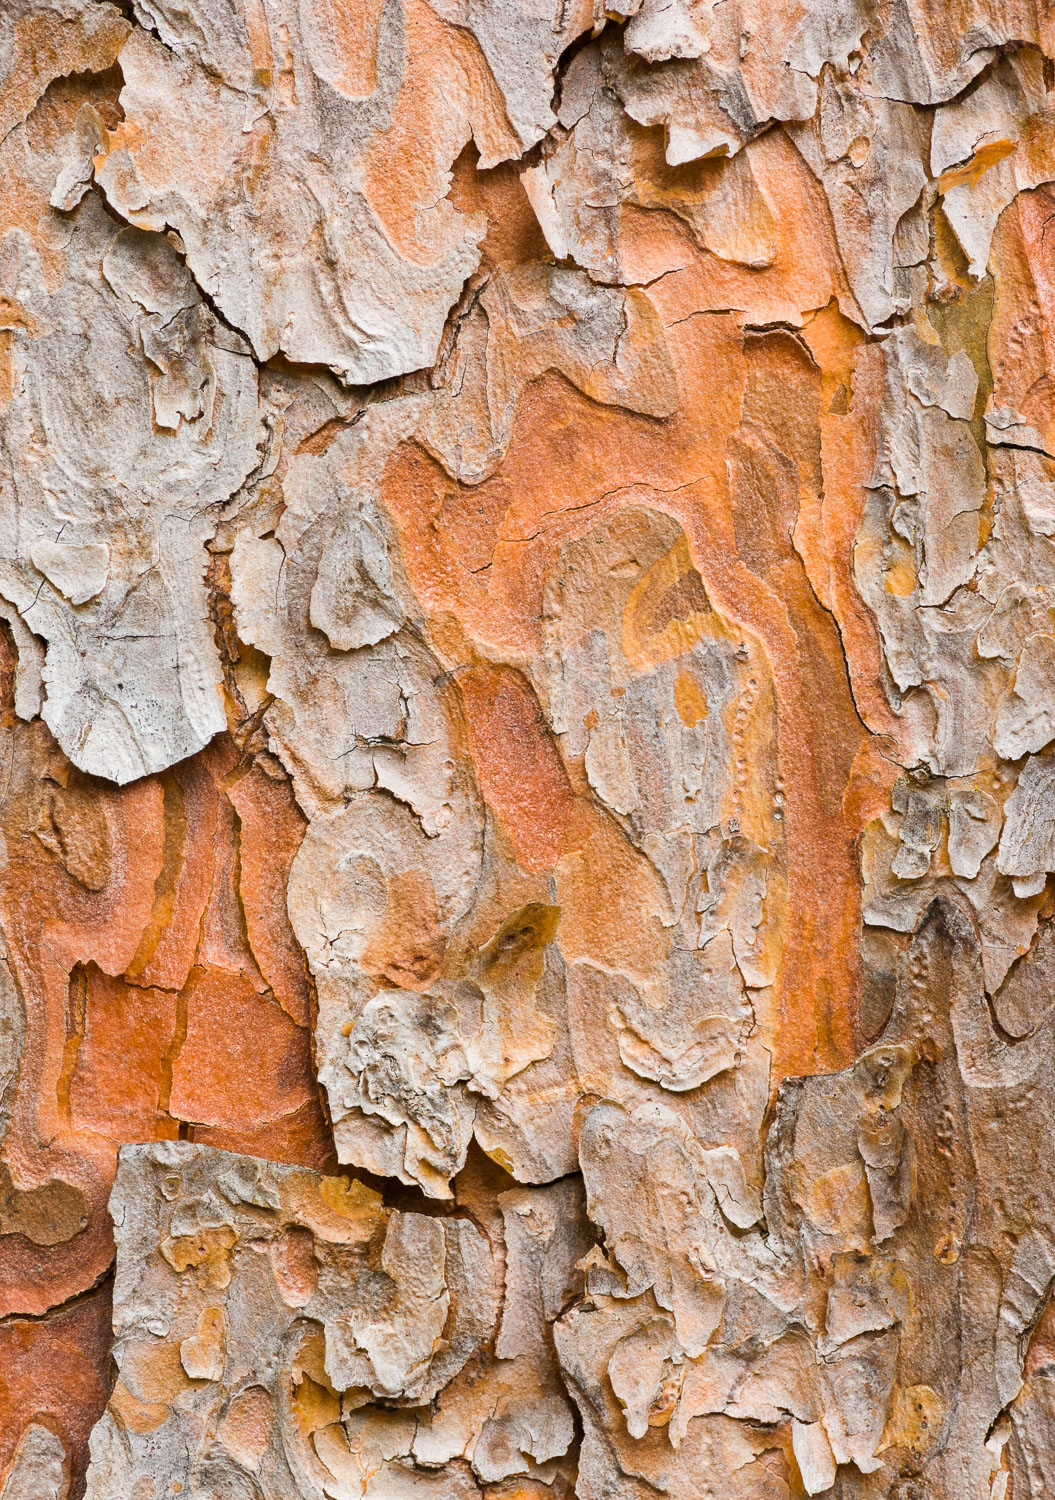 Japanese Red Pine (Pinus densiflora) tree bark textures; native to East Asia.  Image #200